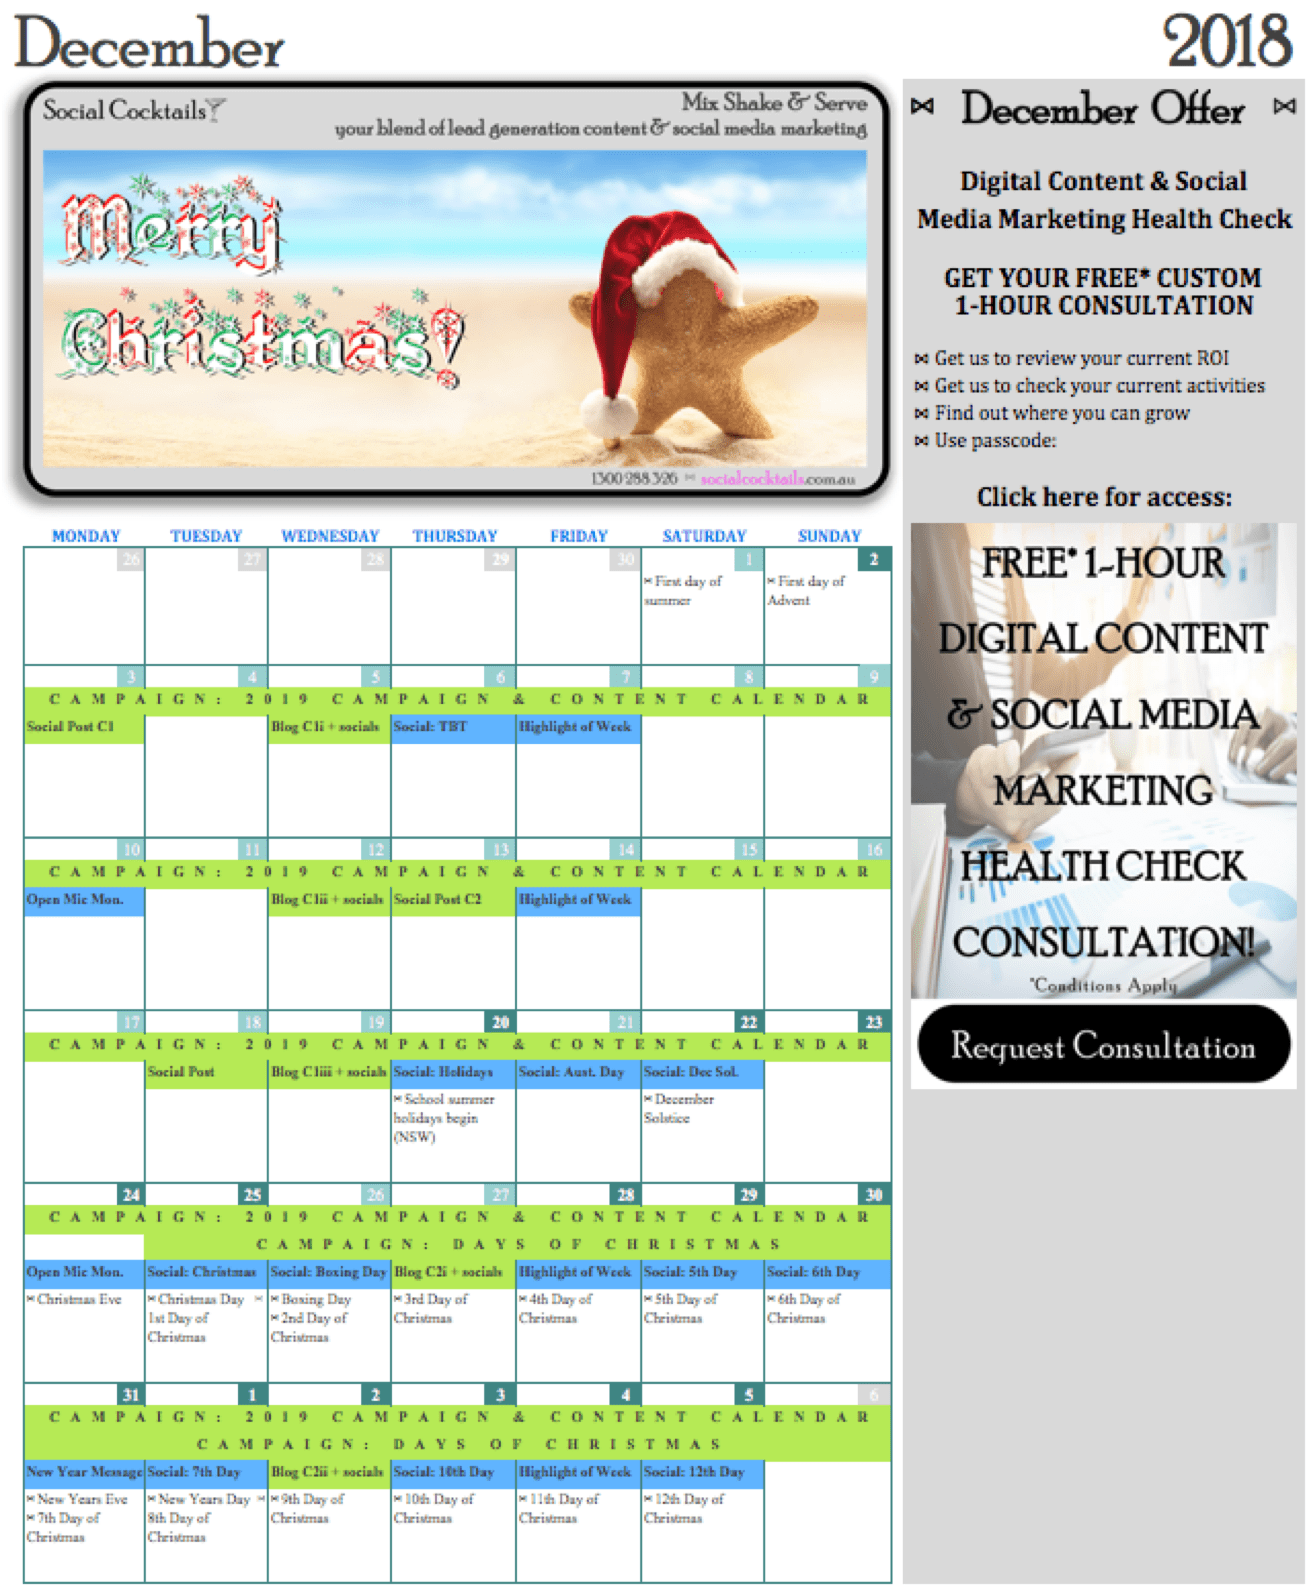 Campaign, Content & Social Media Marketing Calendar Plan